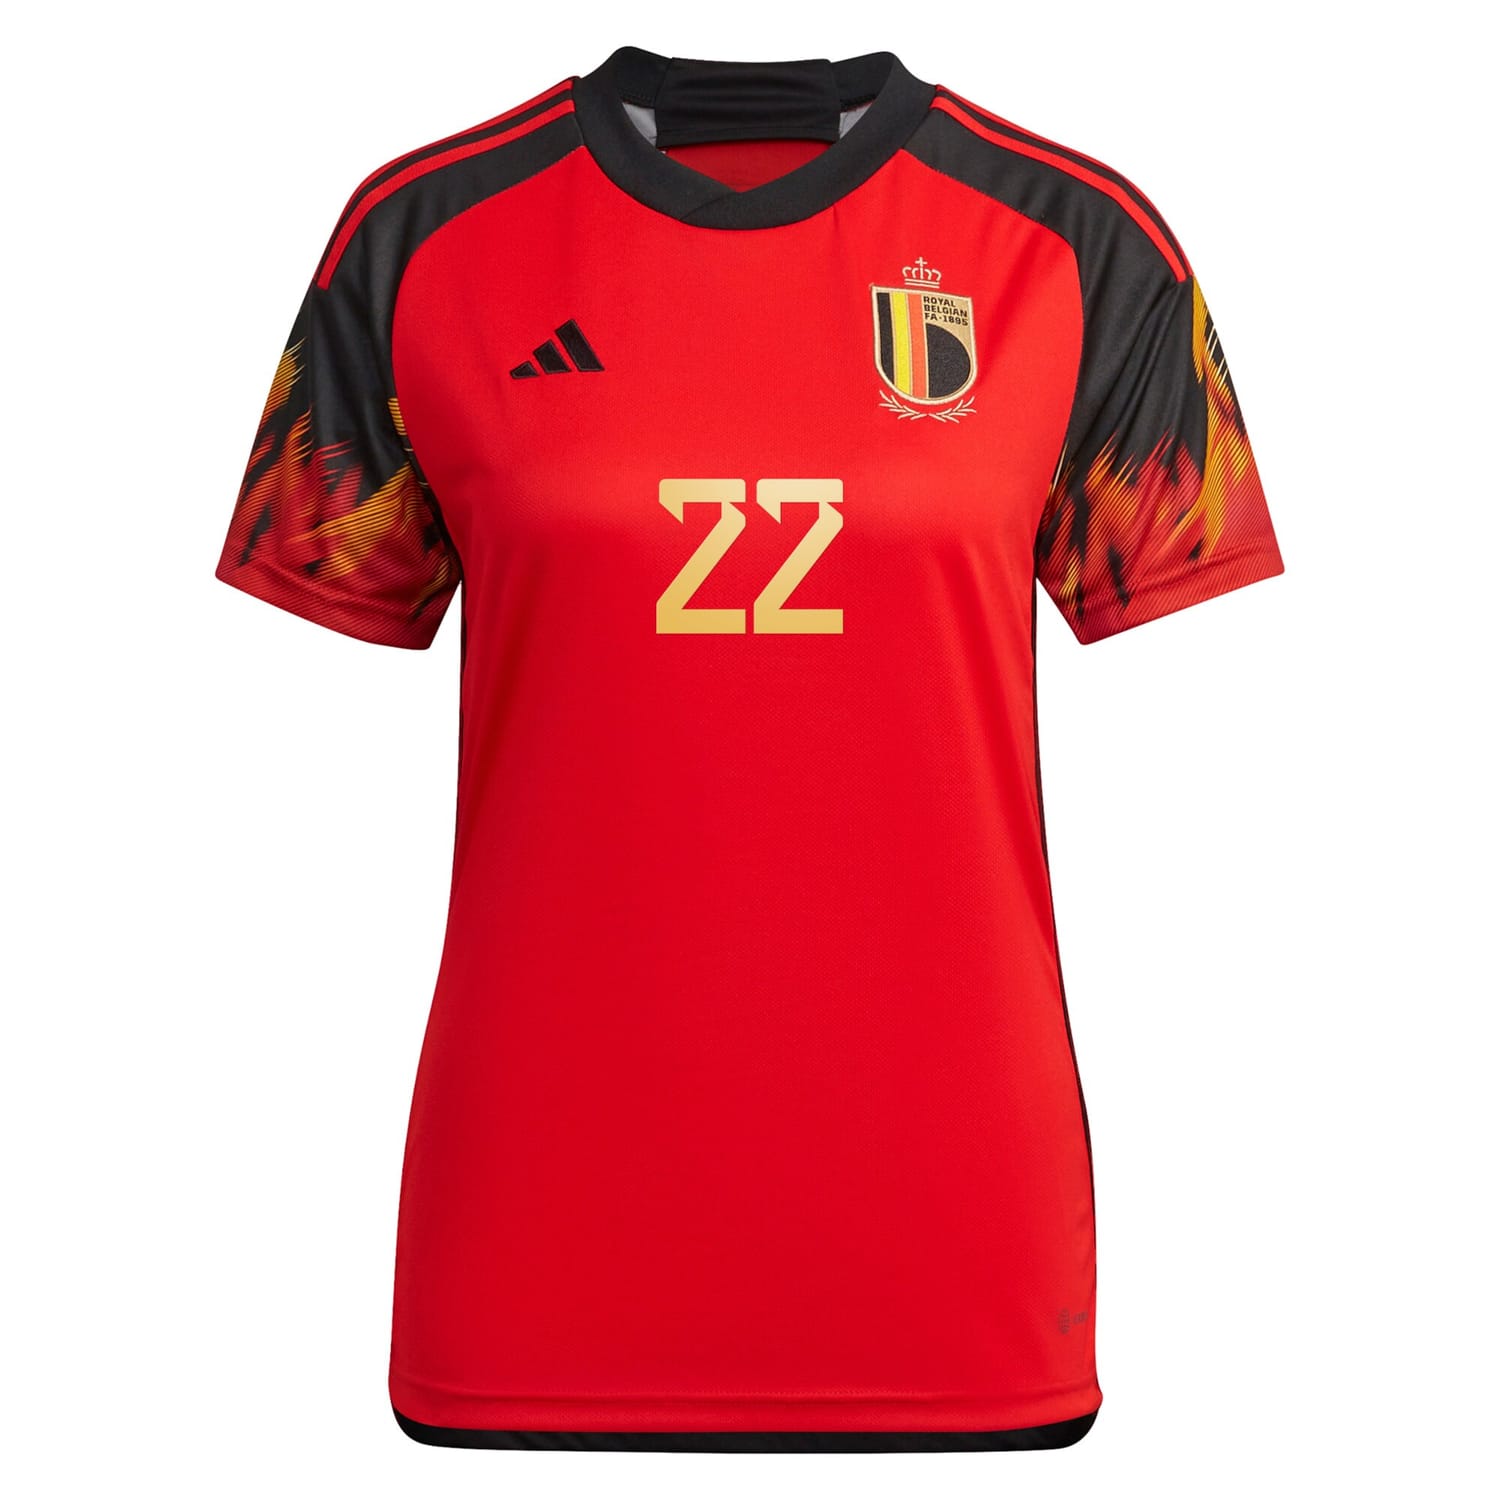 Belgium National Team Home Jersey Shirt 2022 player Laura Deloose 22 printing for Women